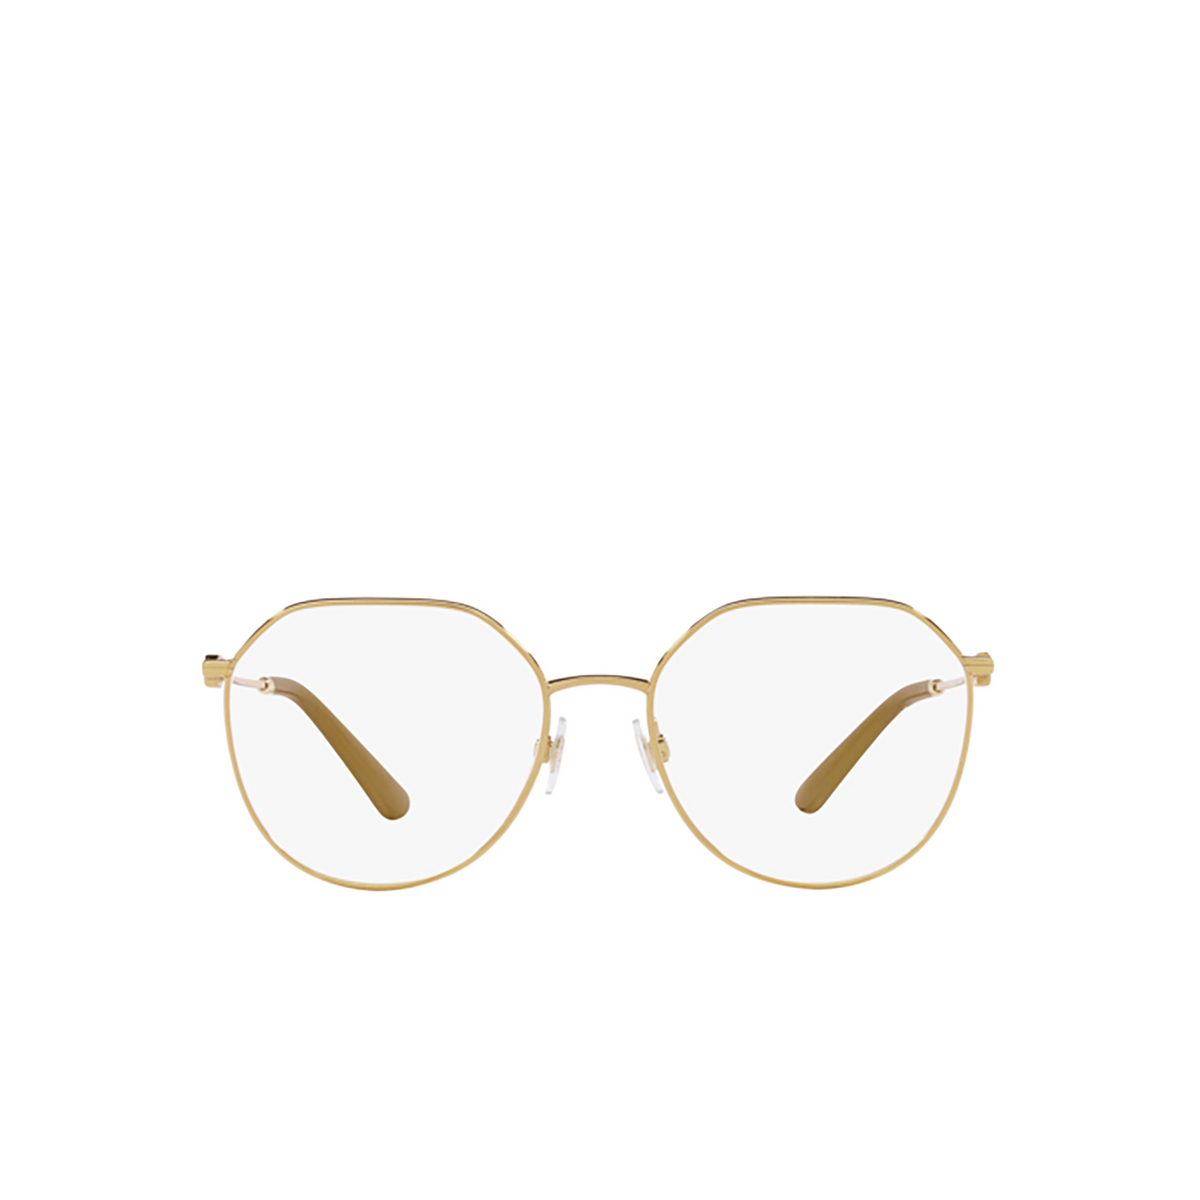 Dolce & Gabbana DG1348 Eyeglasses 02 Gold - front view